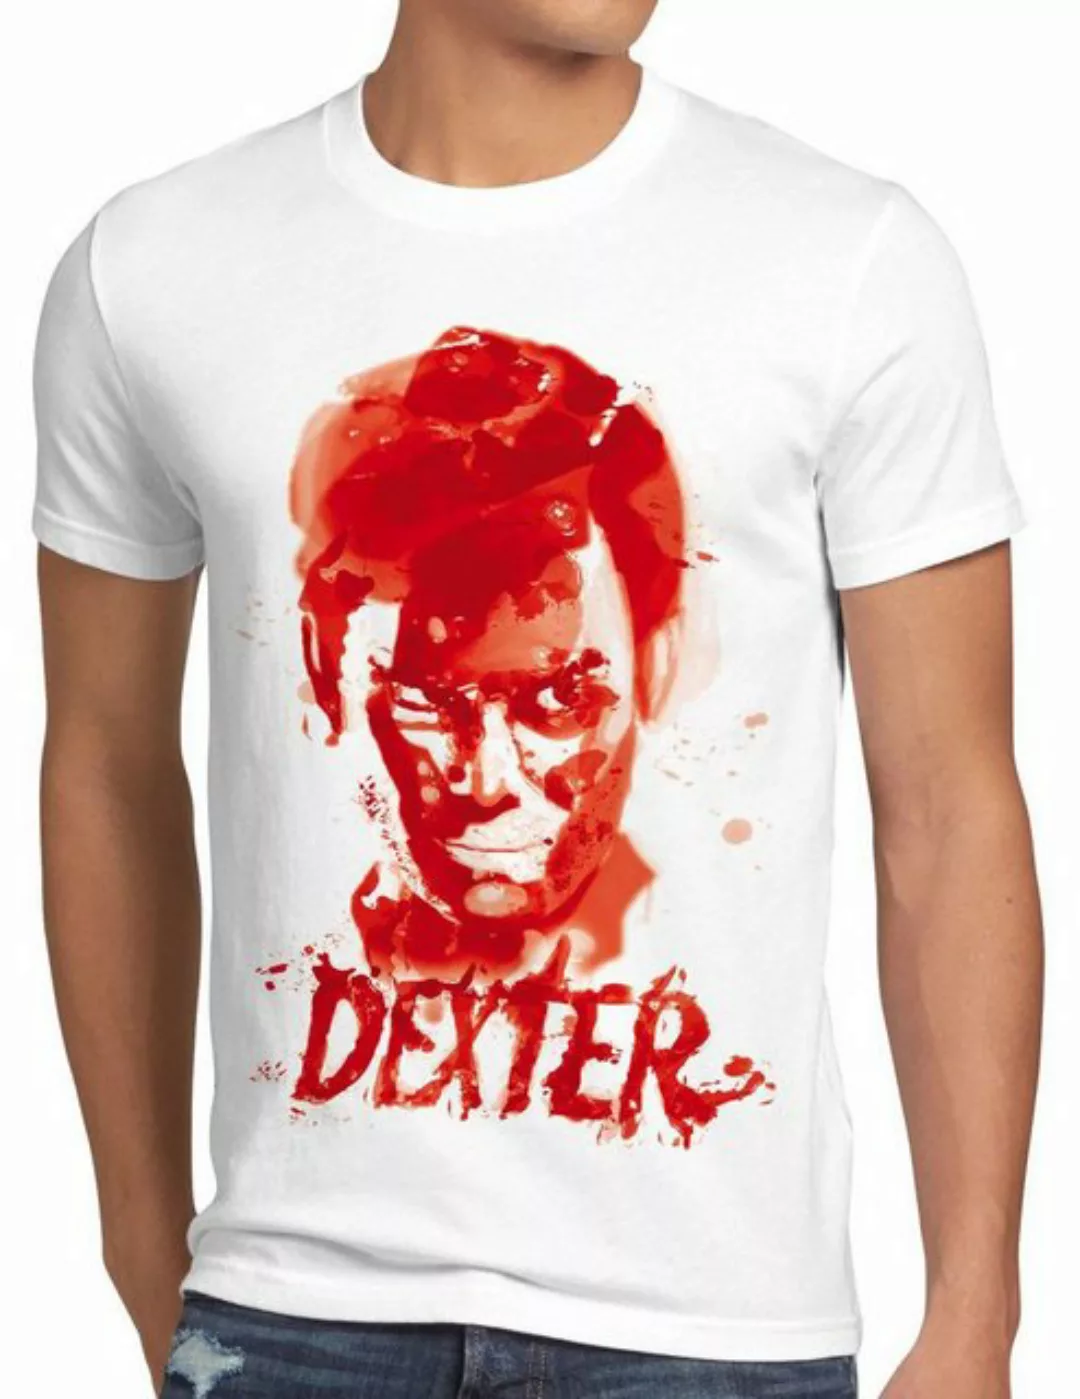 style3 Print-Shirt Herren T-Shirt DEXTER Miami blut mord morgan trinity ser günstig online kaufen